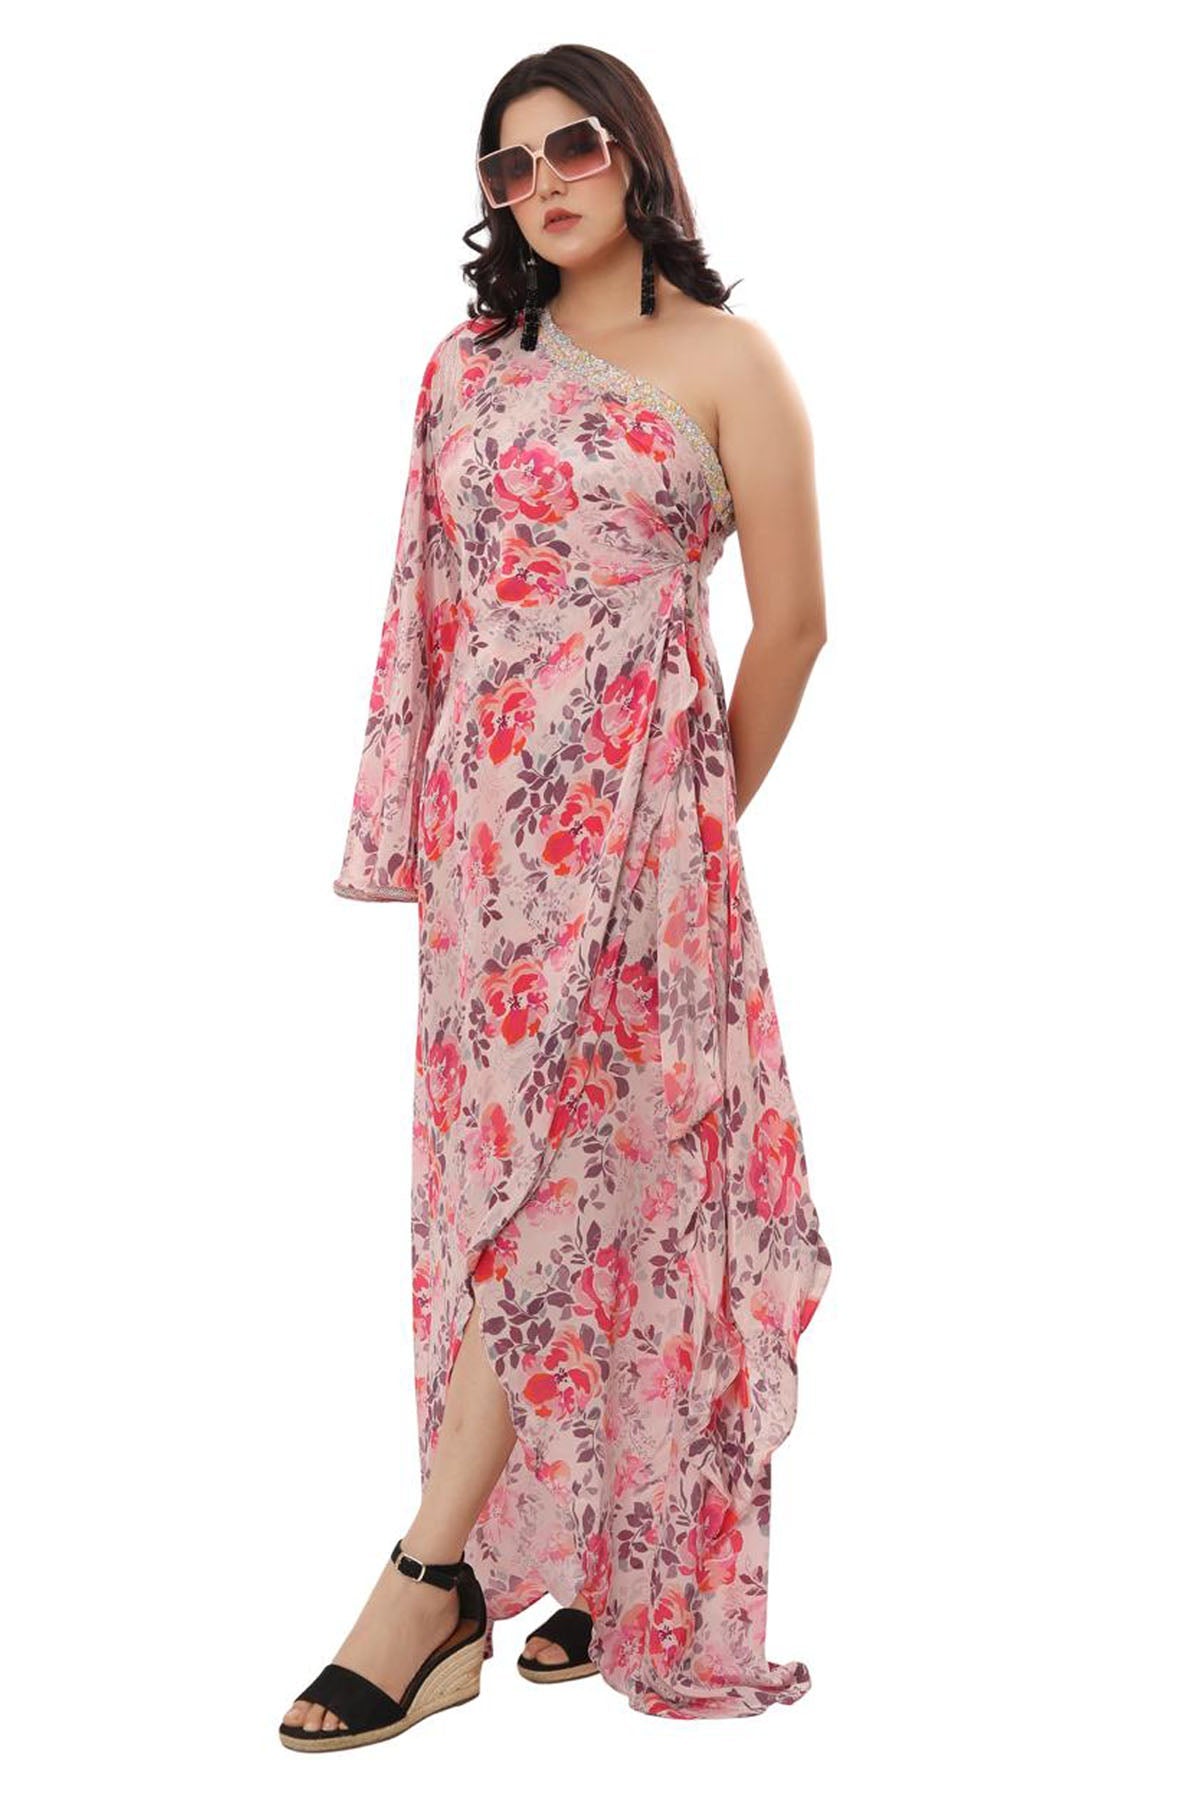 Niyami Pink Floral One Shoulder Dress at ScrollnShops